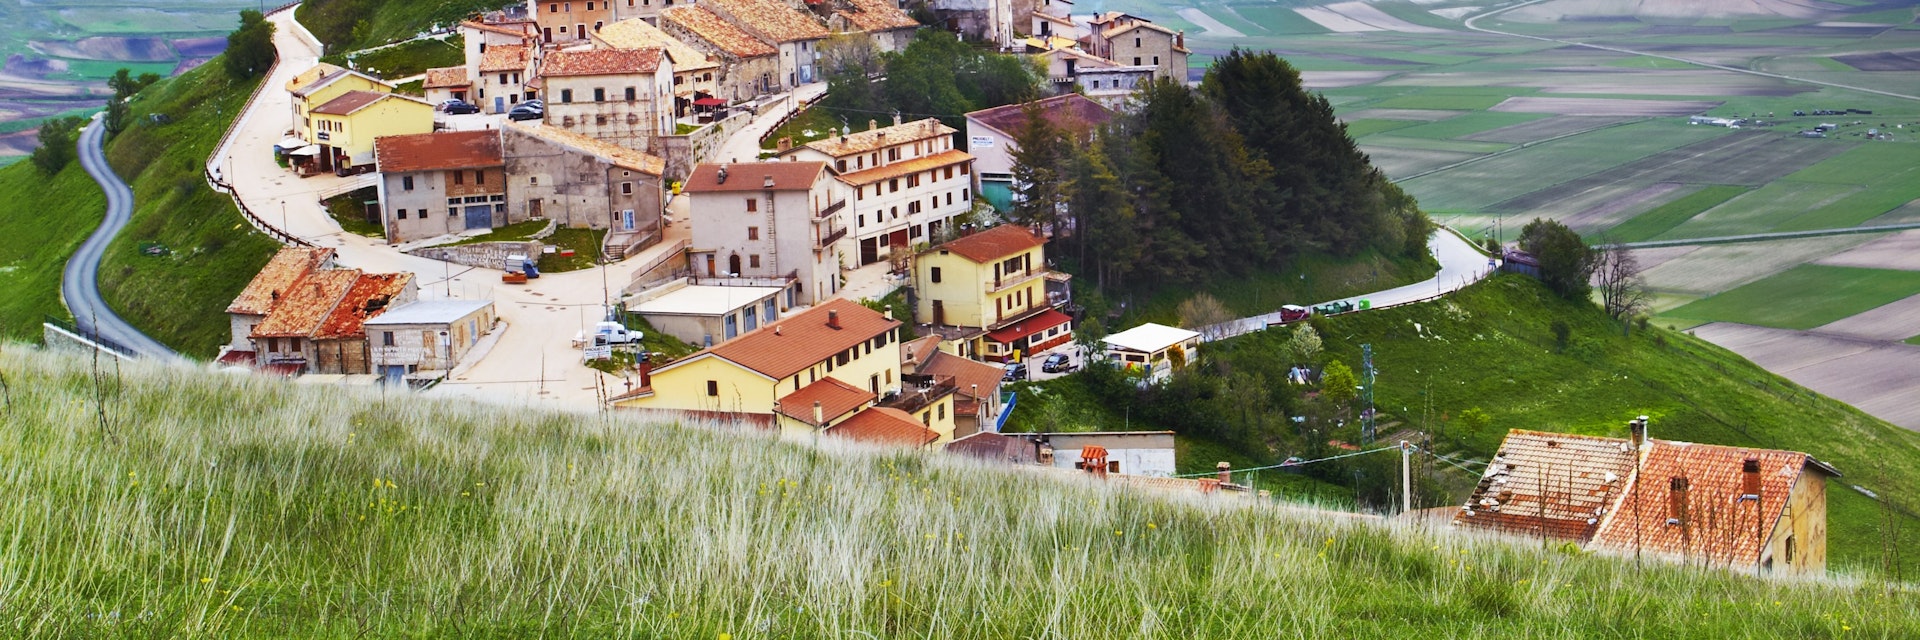 Monti Sibillini towering above hilltop village of Castelluccio.